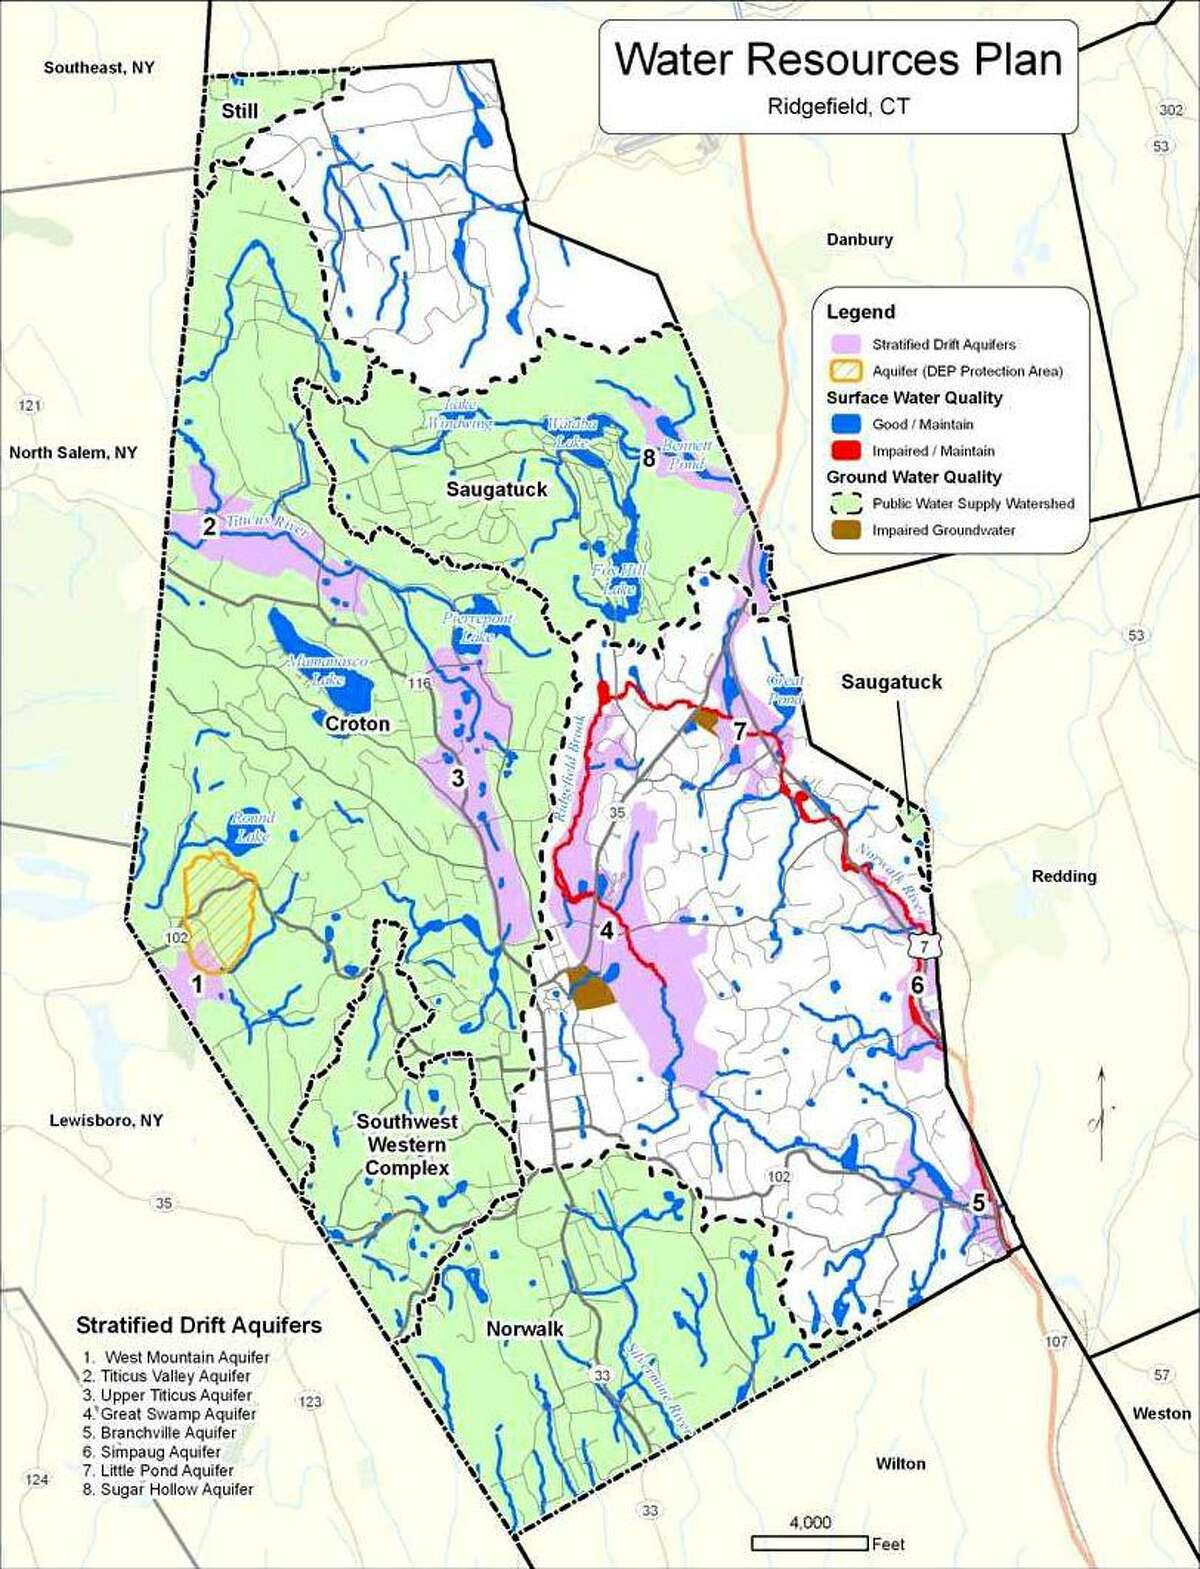 Ridgefield's Water Resource Plan